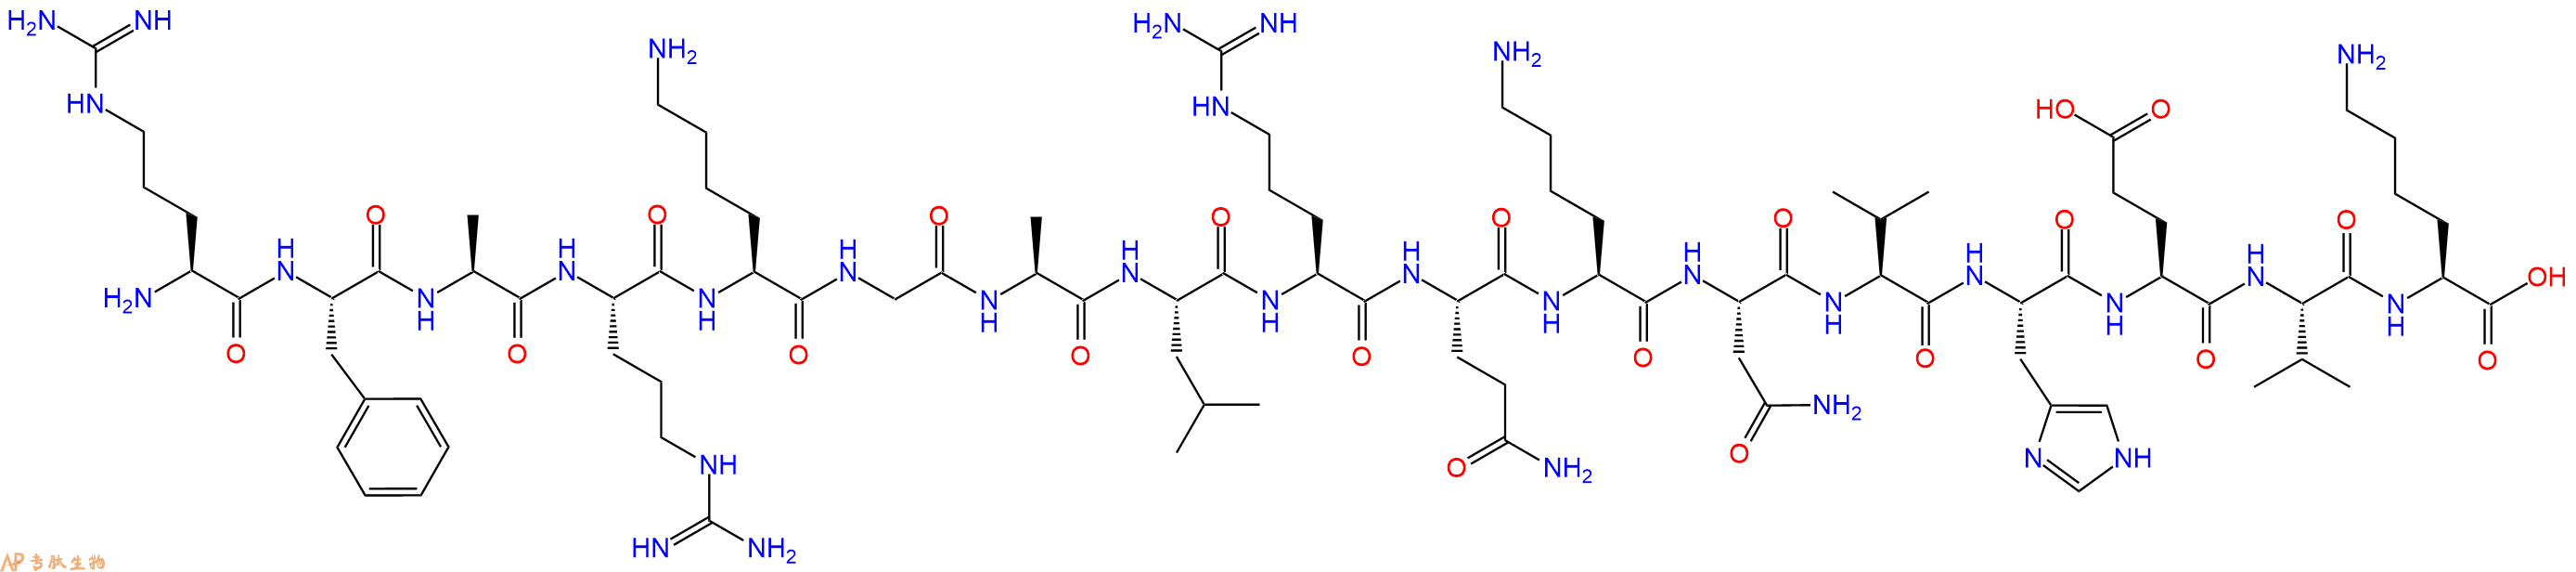 专肽生物产品蛋白激酶C片段 Protein Kinase C(19-35) Peptide